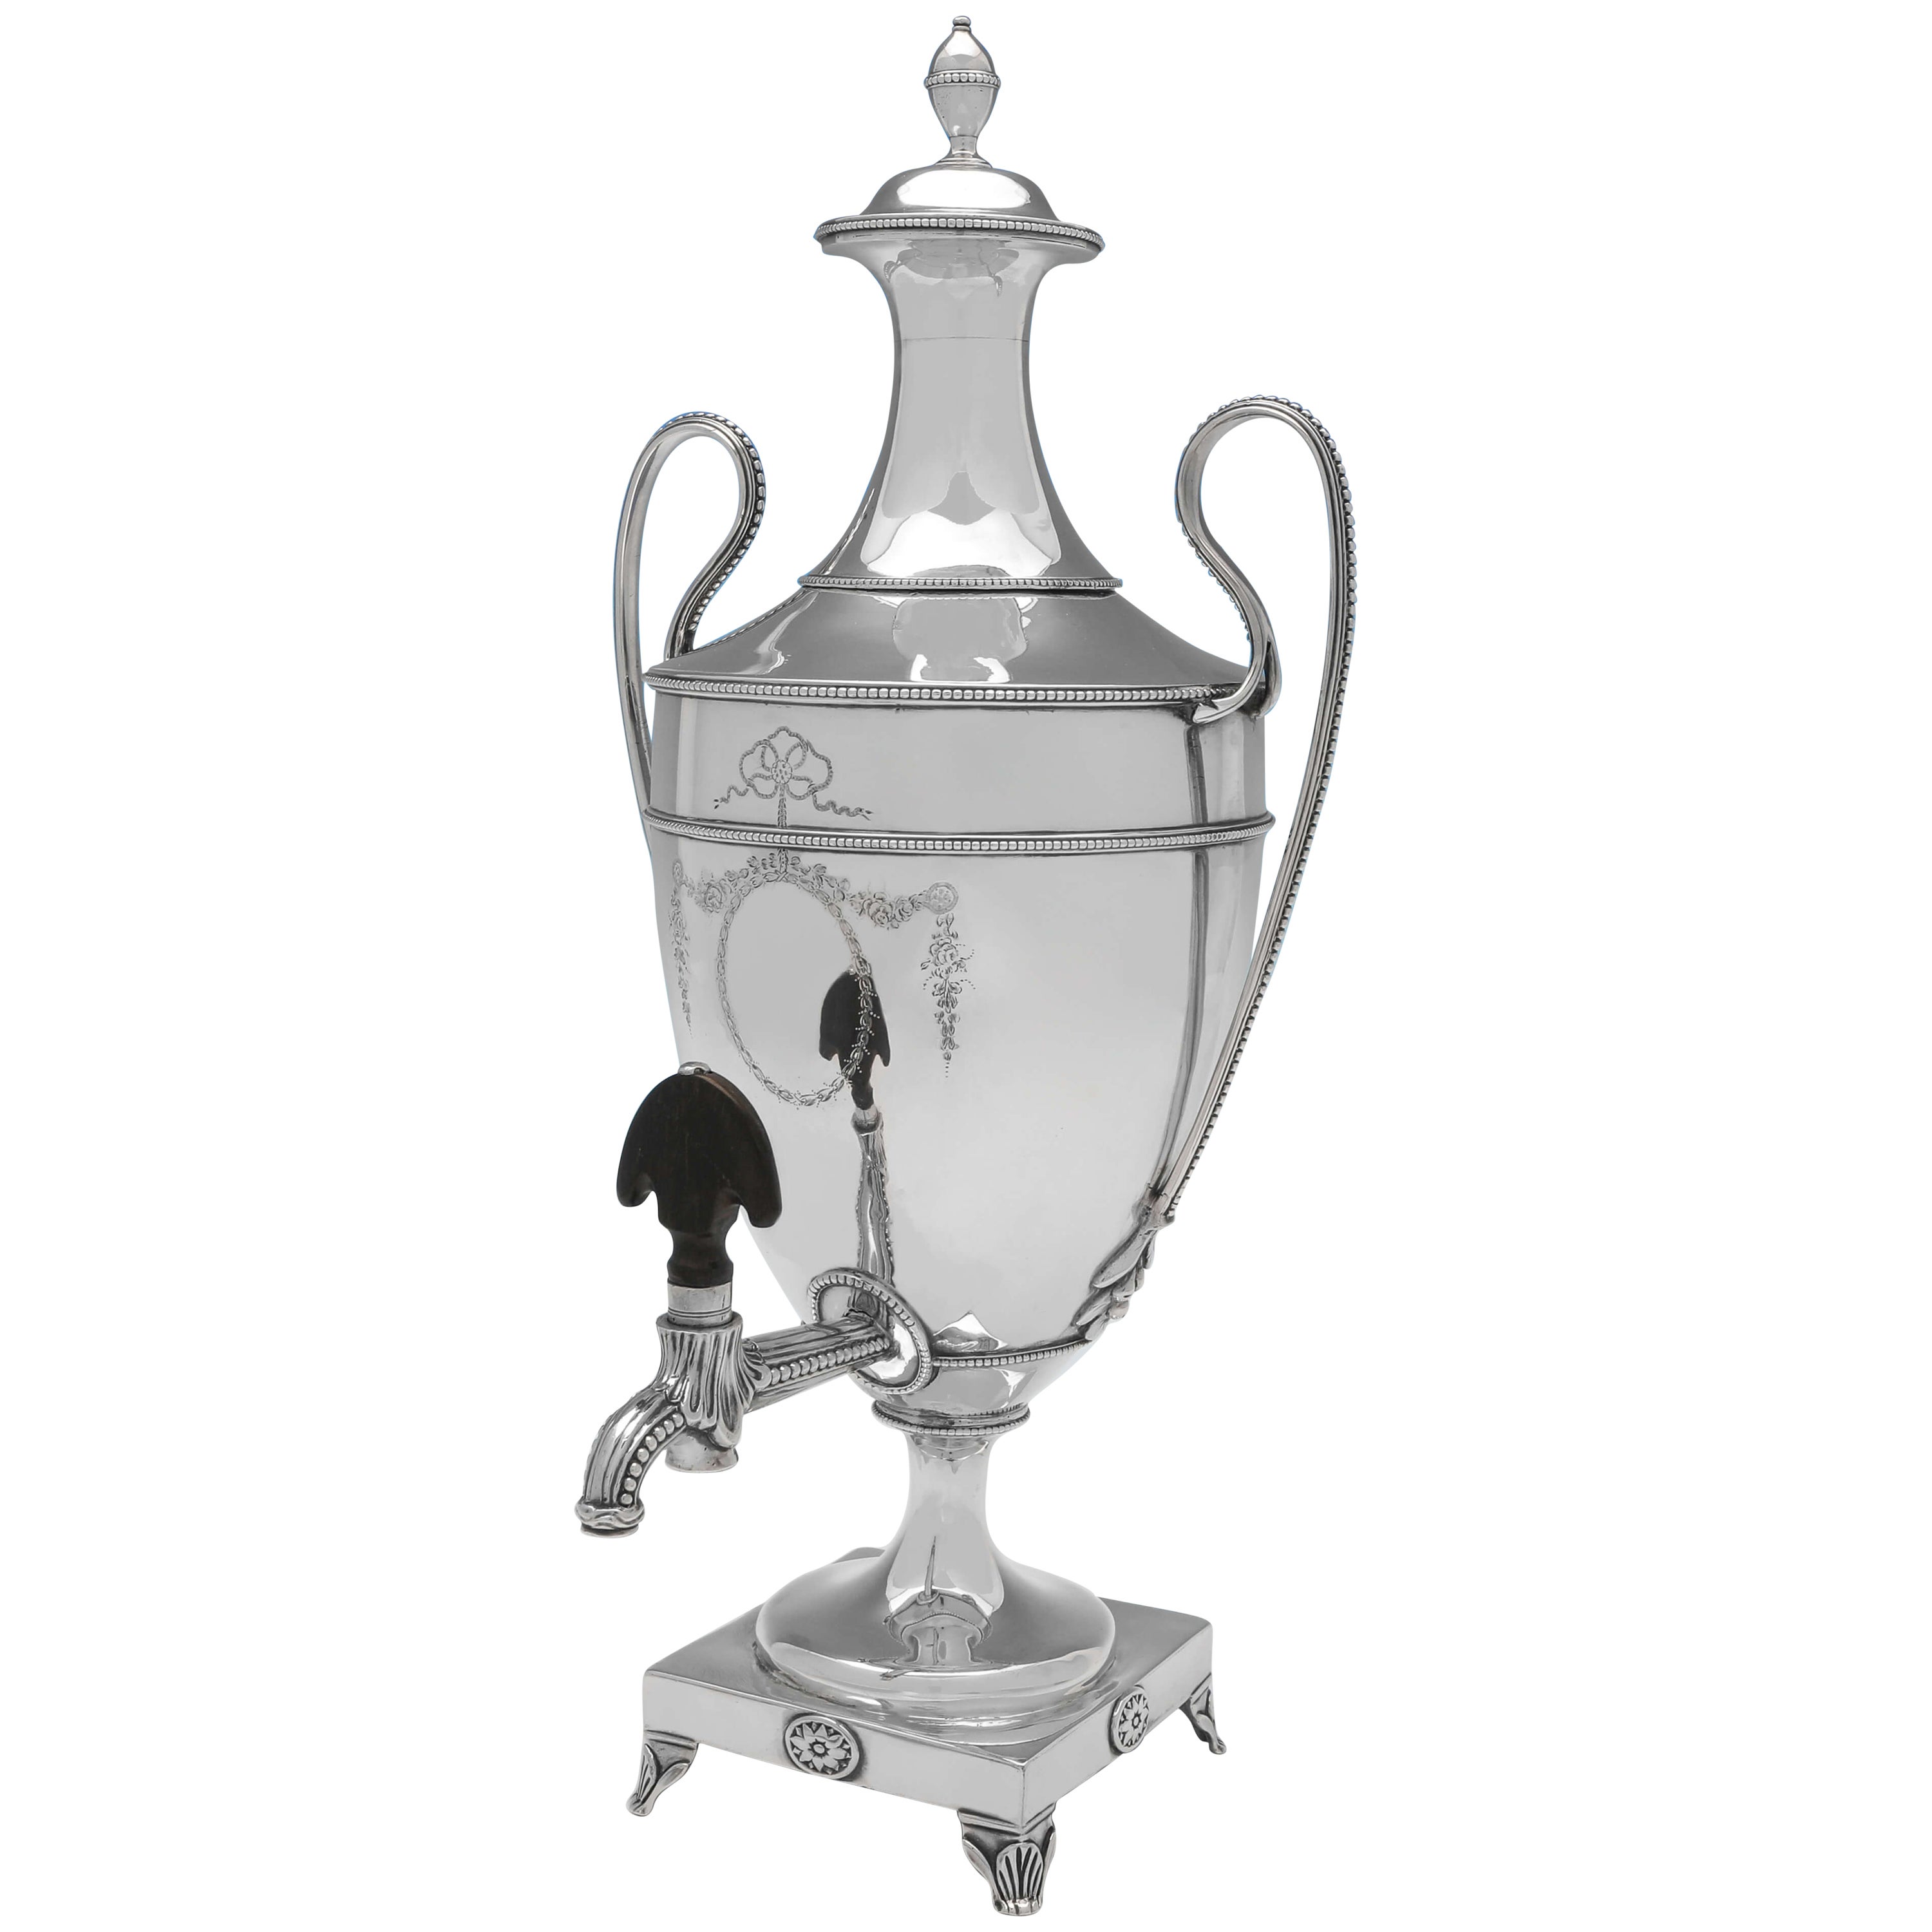 Hester Bateman - Neoclassical Antique Sterling Silver Tea Urn - London 1780 